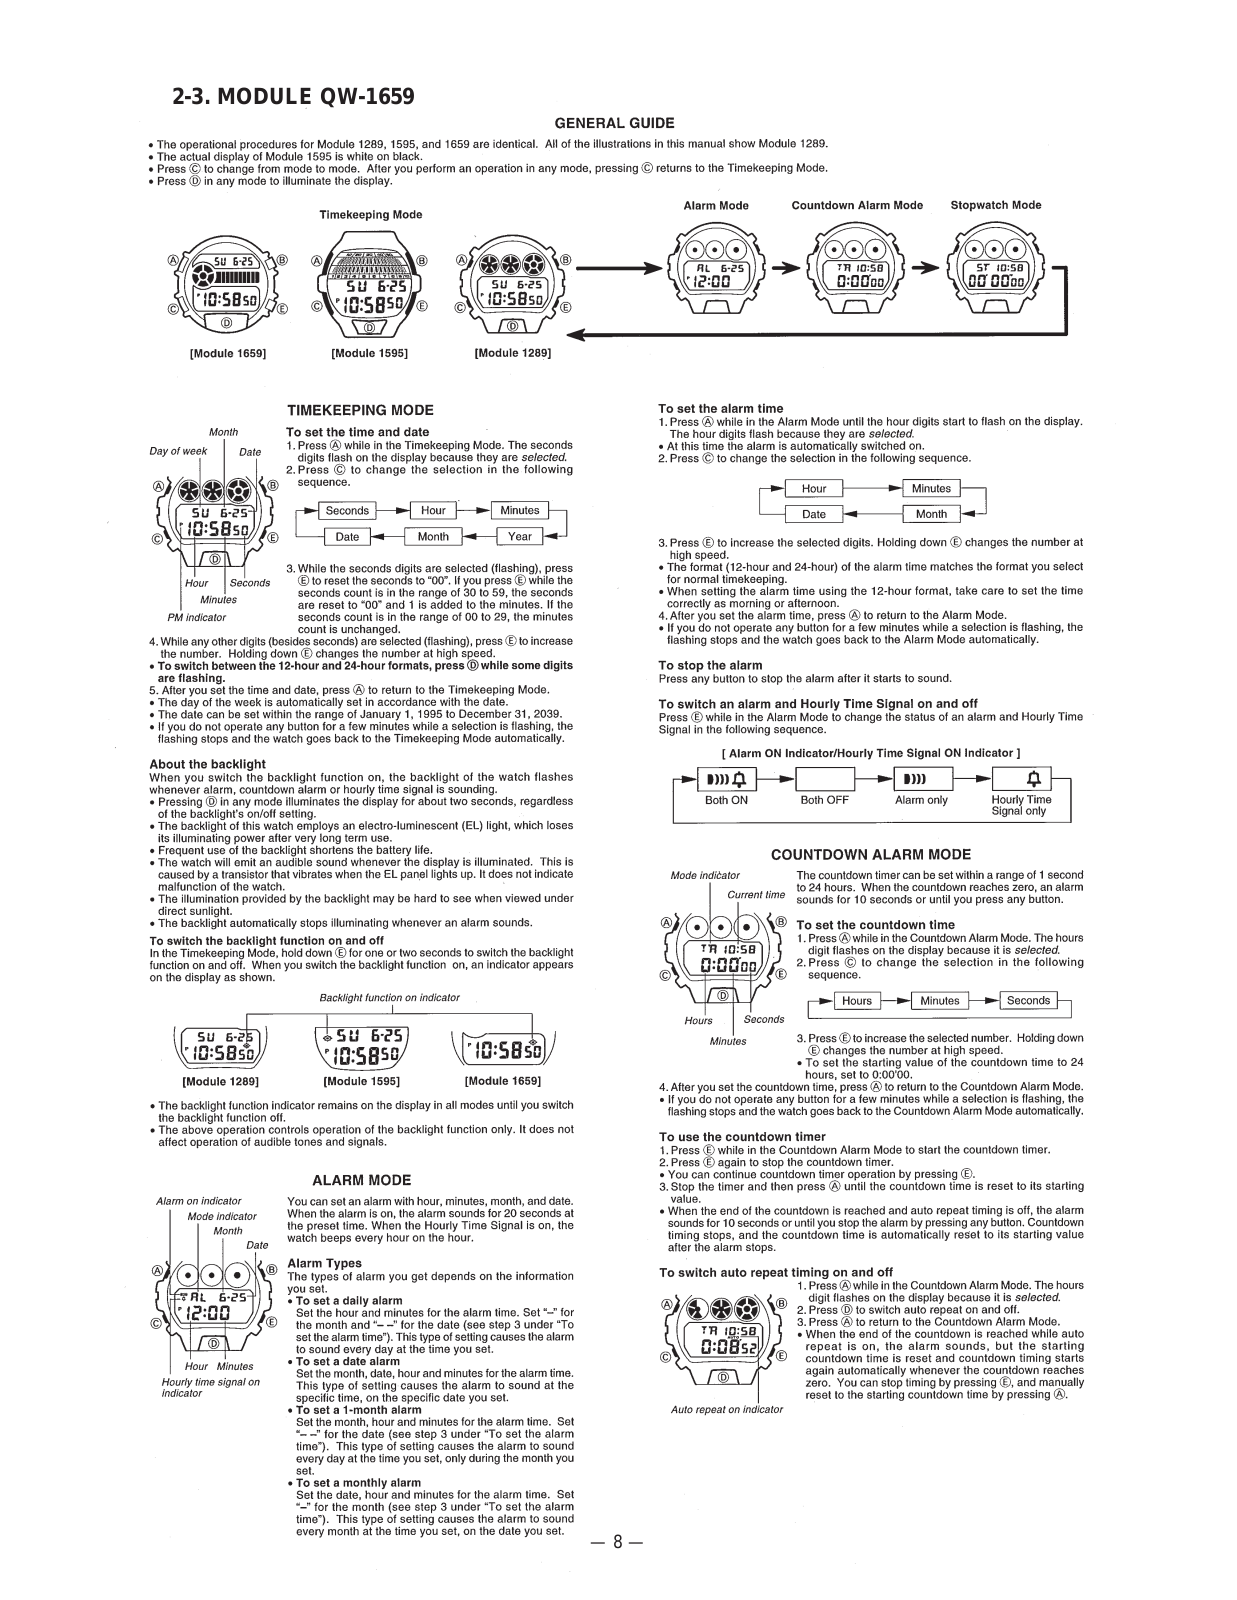 Casio DW9052-1V User Manual